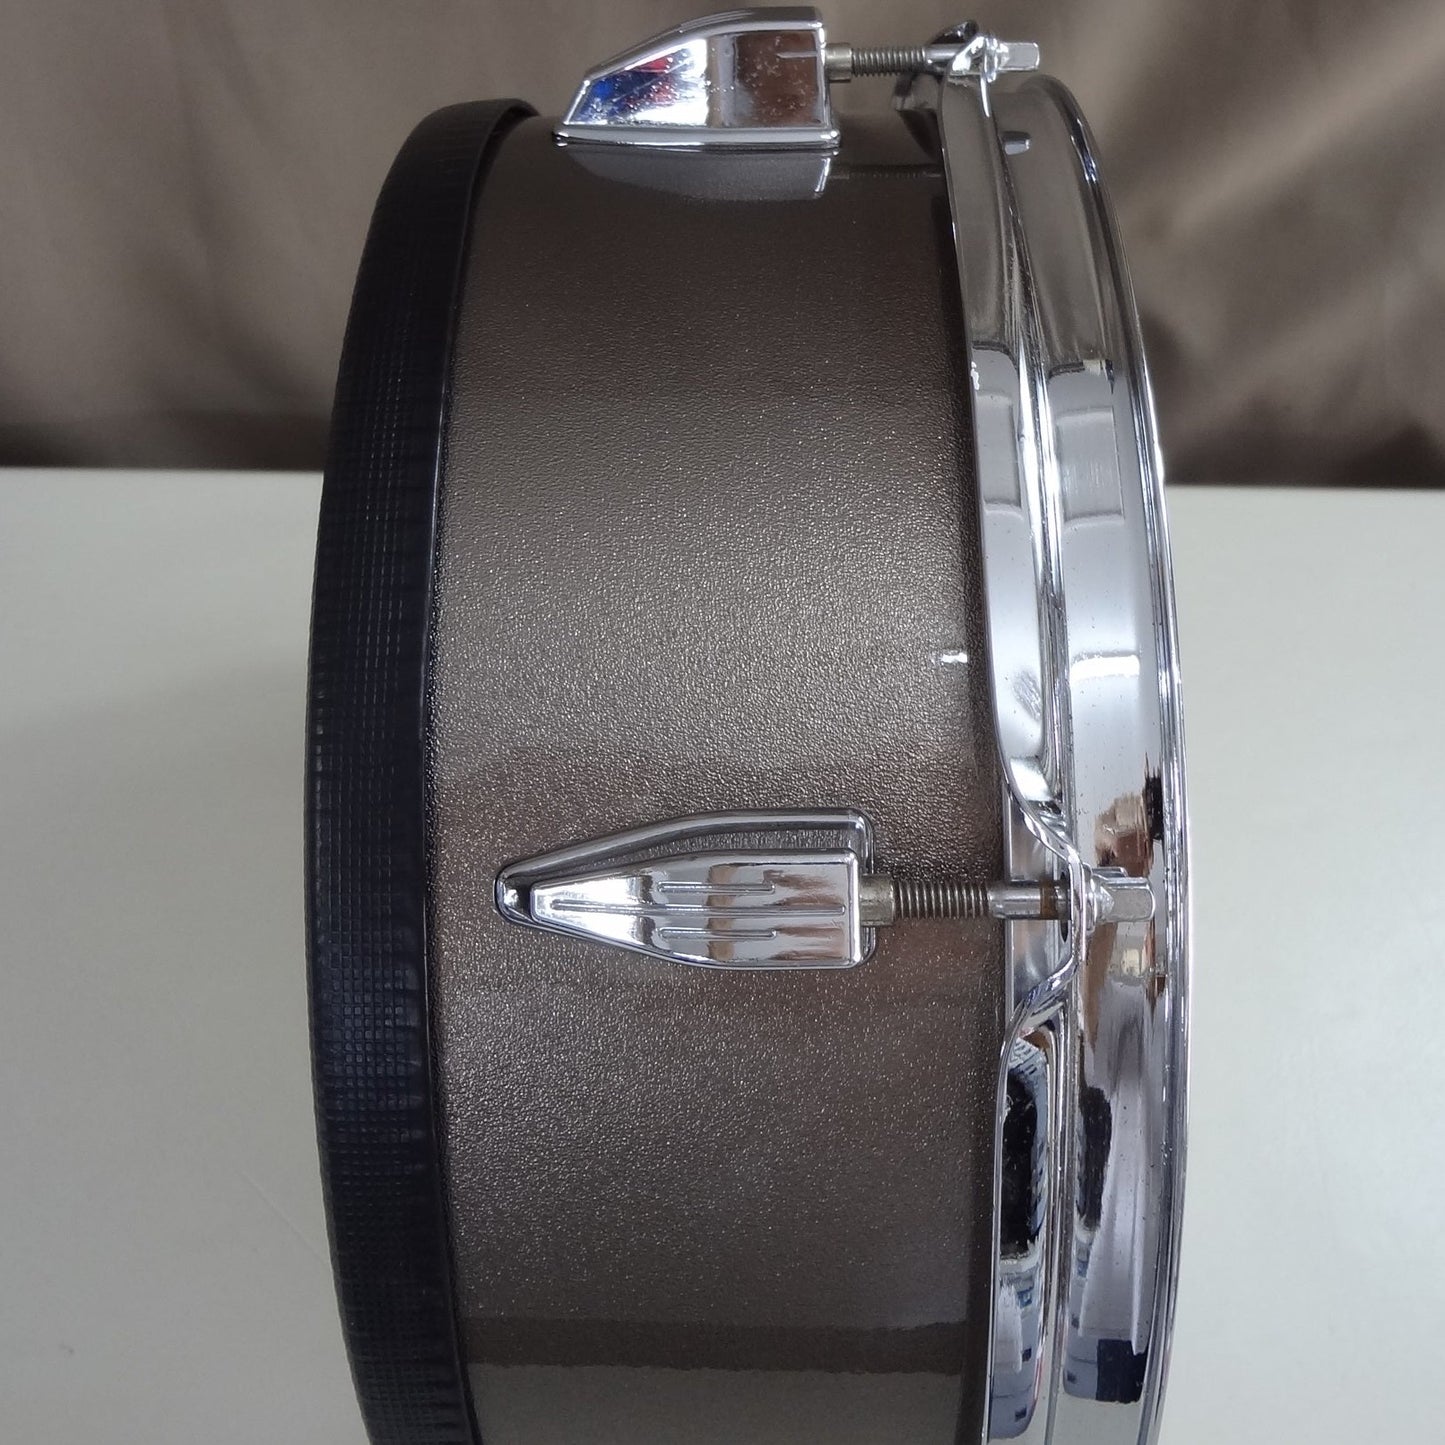 Refurbished 12 Inch Custom Built Electronic Snare Drum - Bronze Metallic